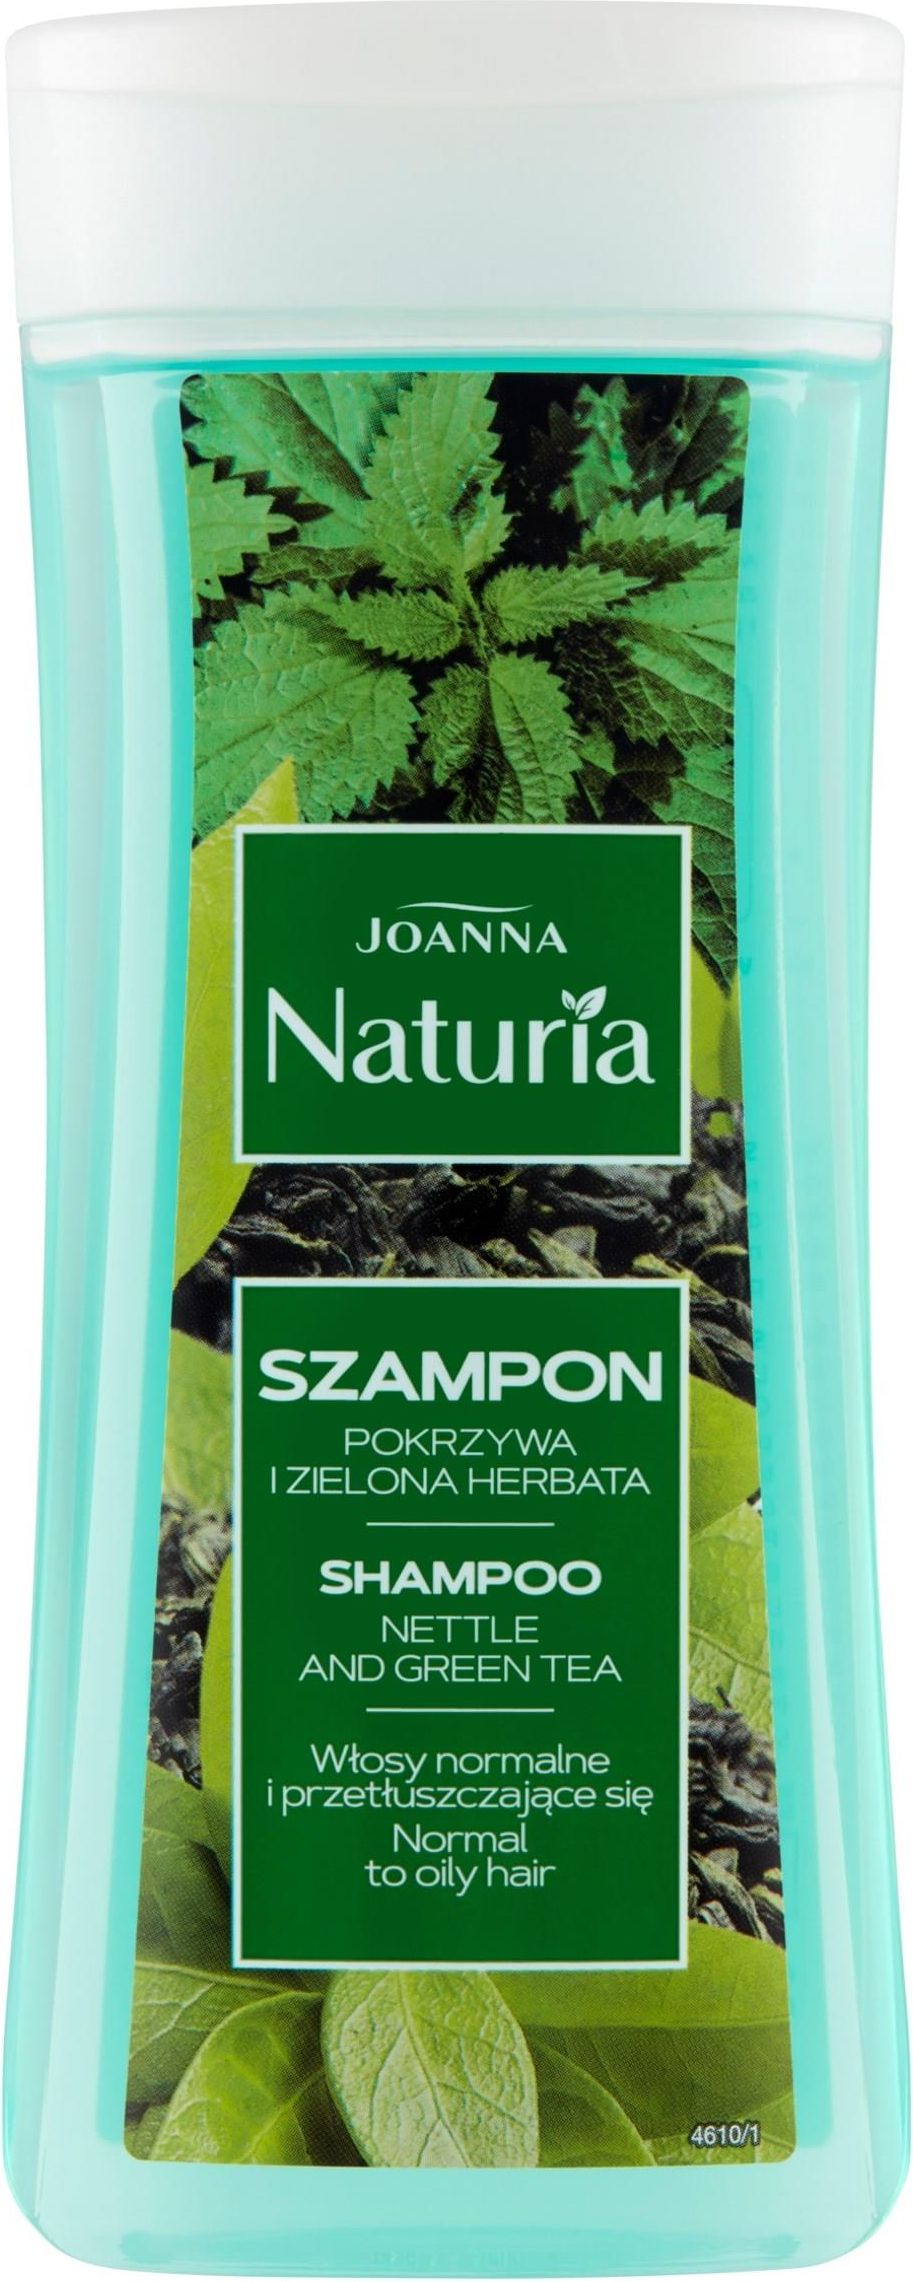 joanna naturia szampon wizaz